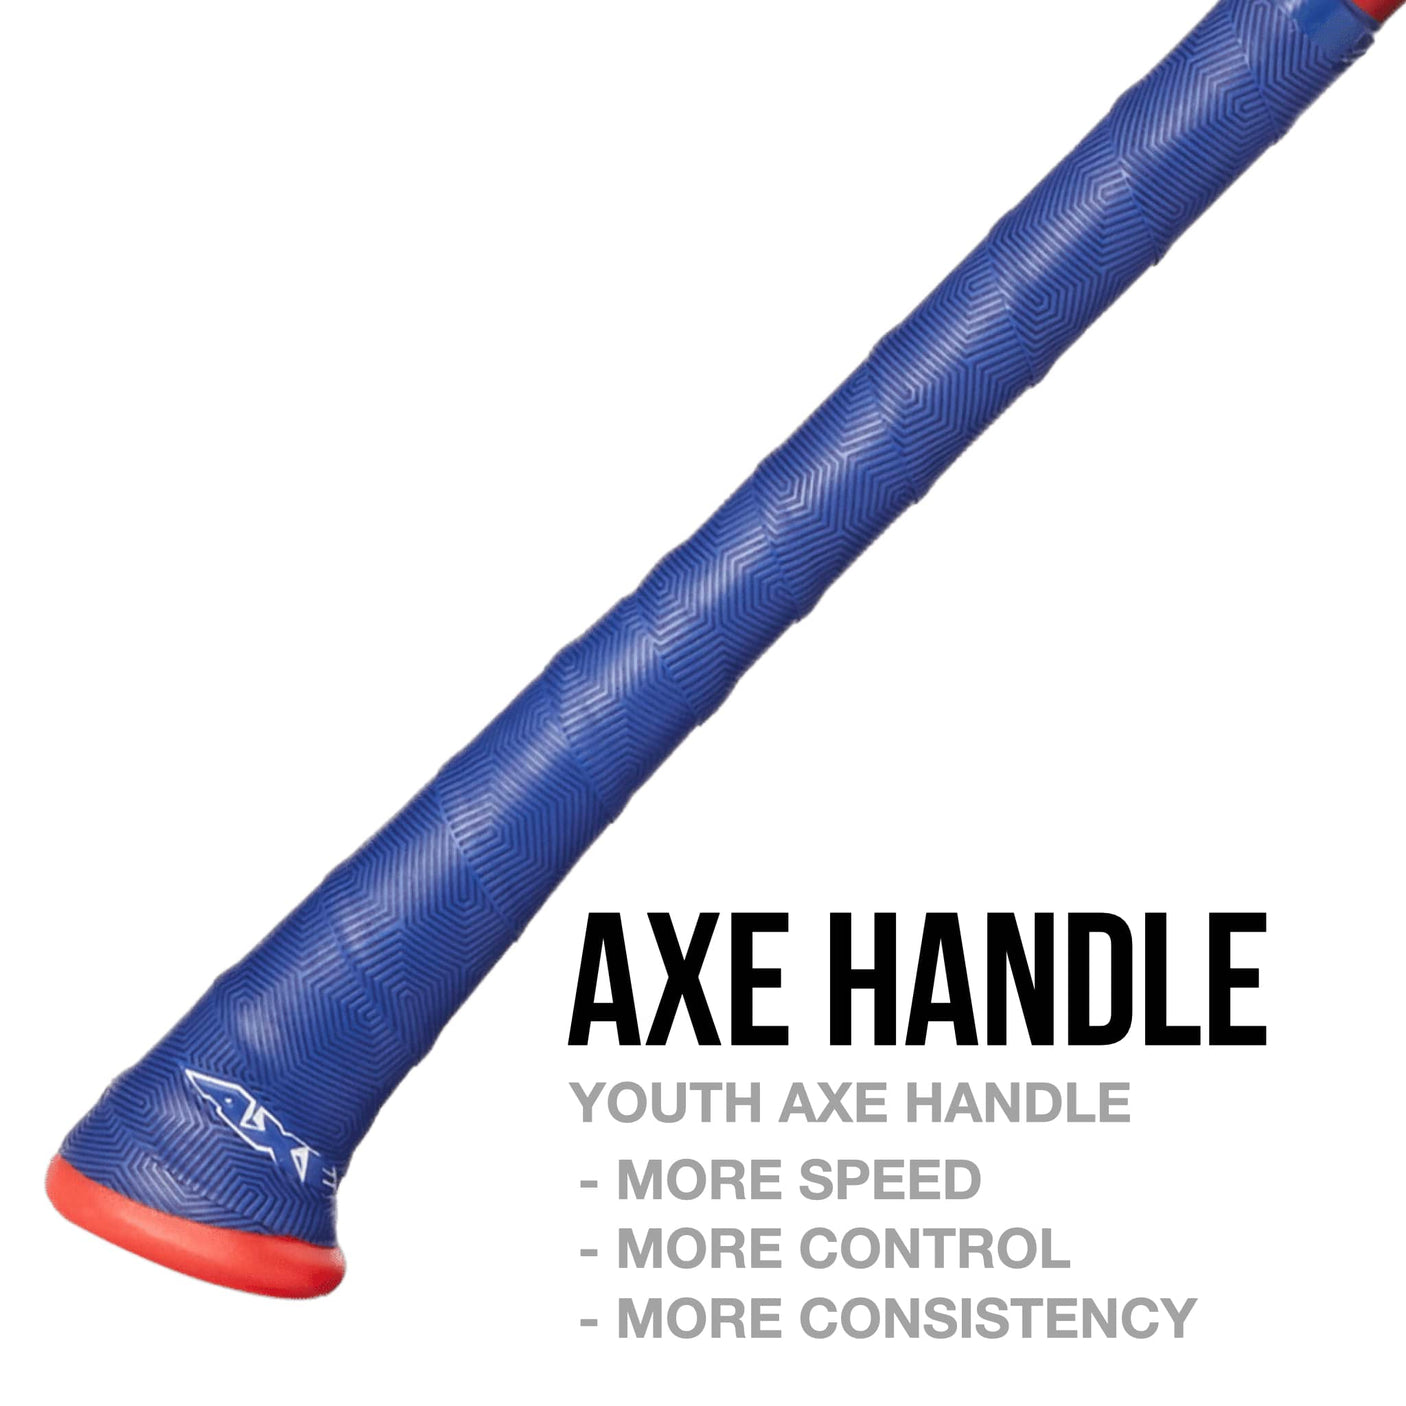 Axe Hero Hyperspeed -12 USA Baseball Bat